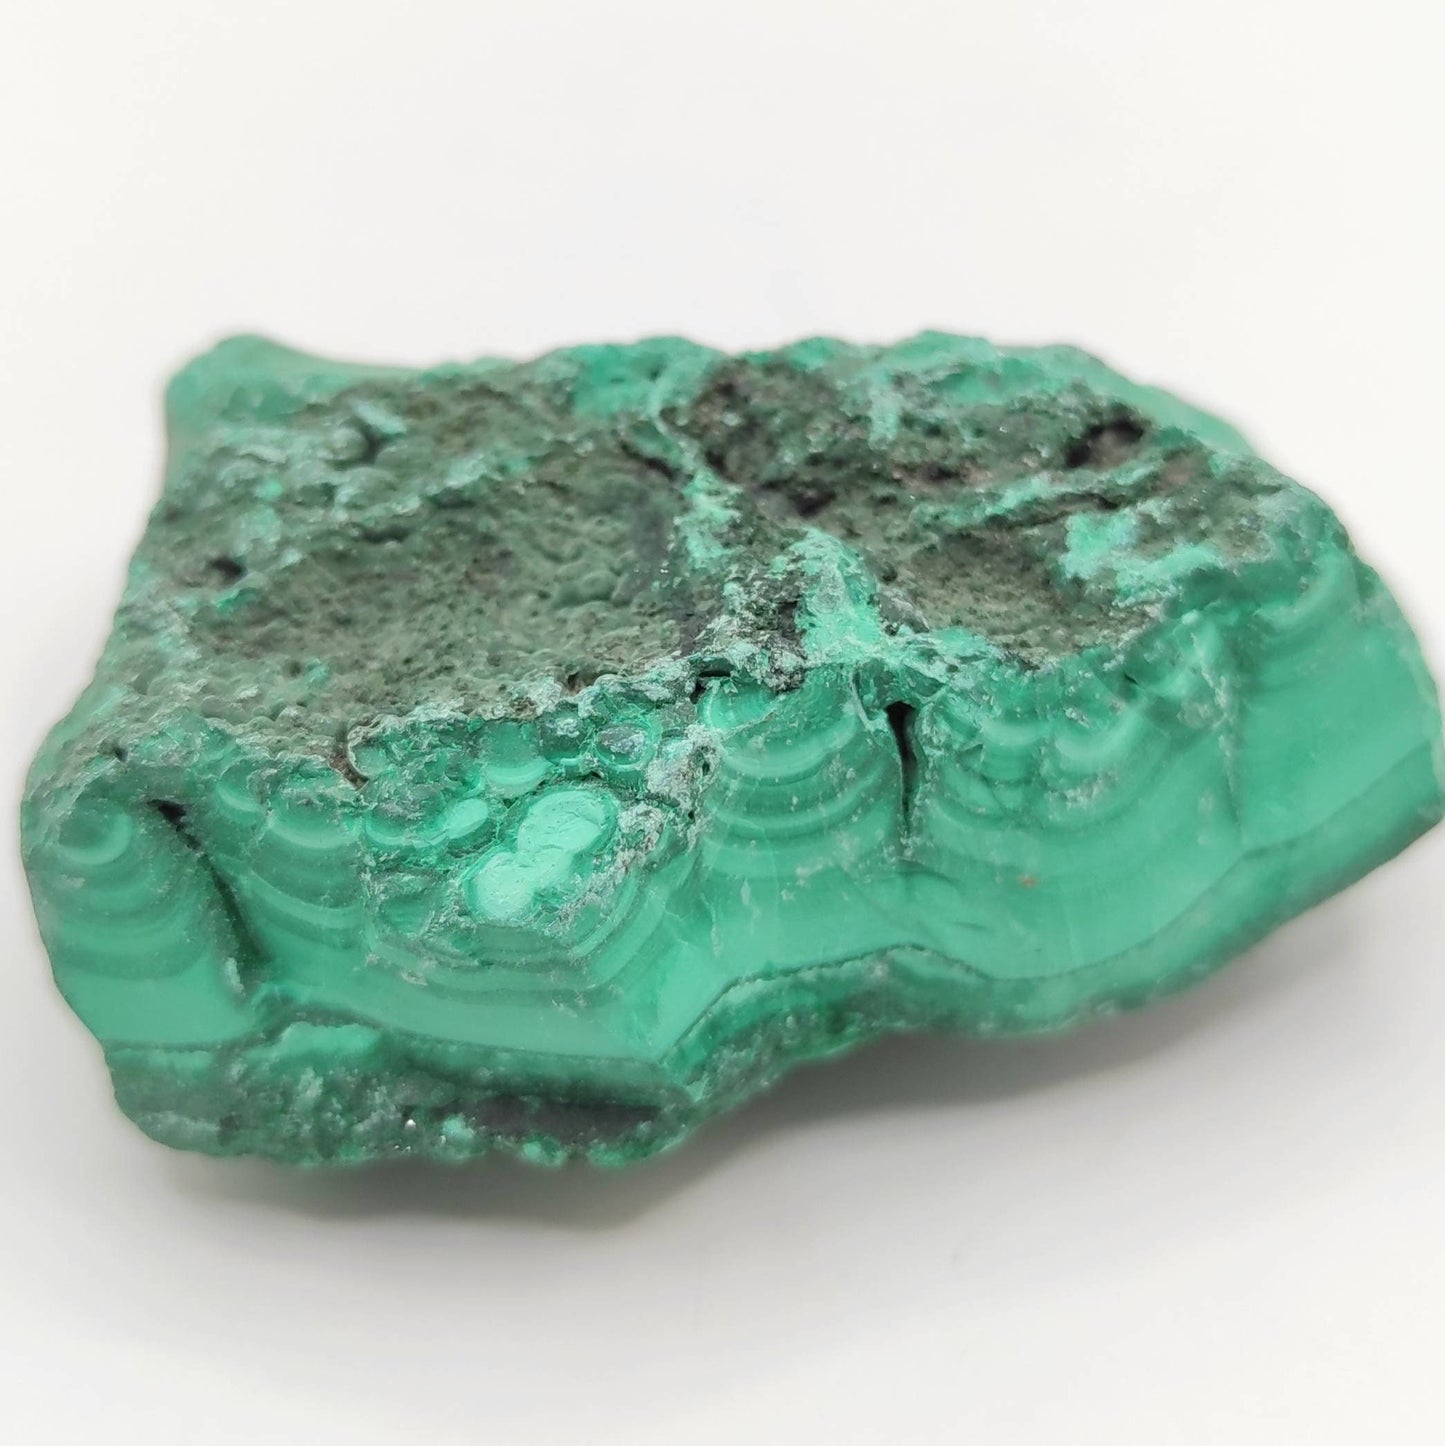 128g Rough Malachite Chunk - Mineral Specimen - Natural Green Crystals - Green Malachite - Natural Raw Crystal Cluster - Unique Specimen